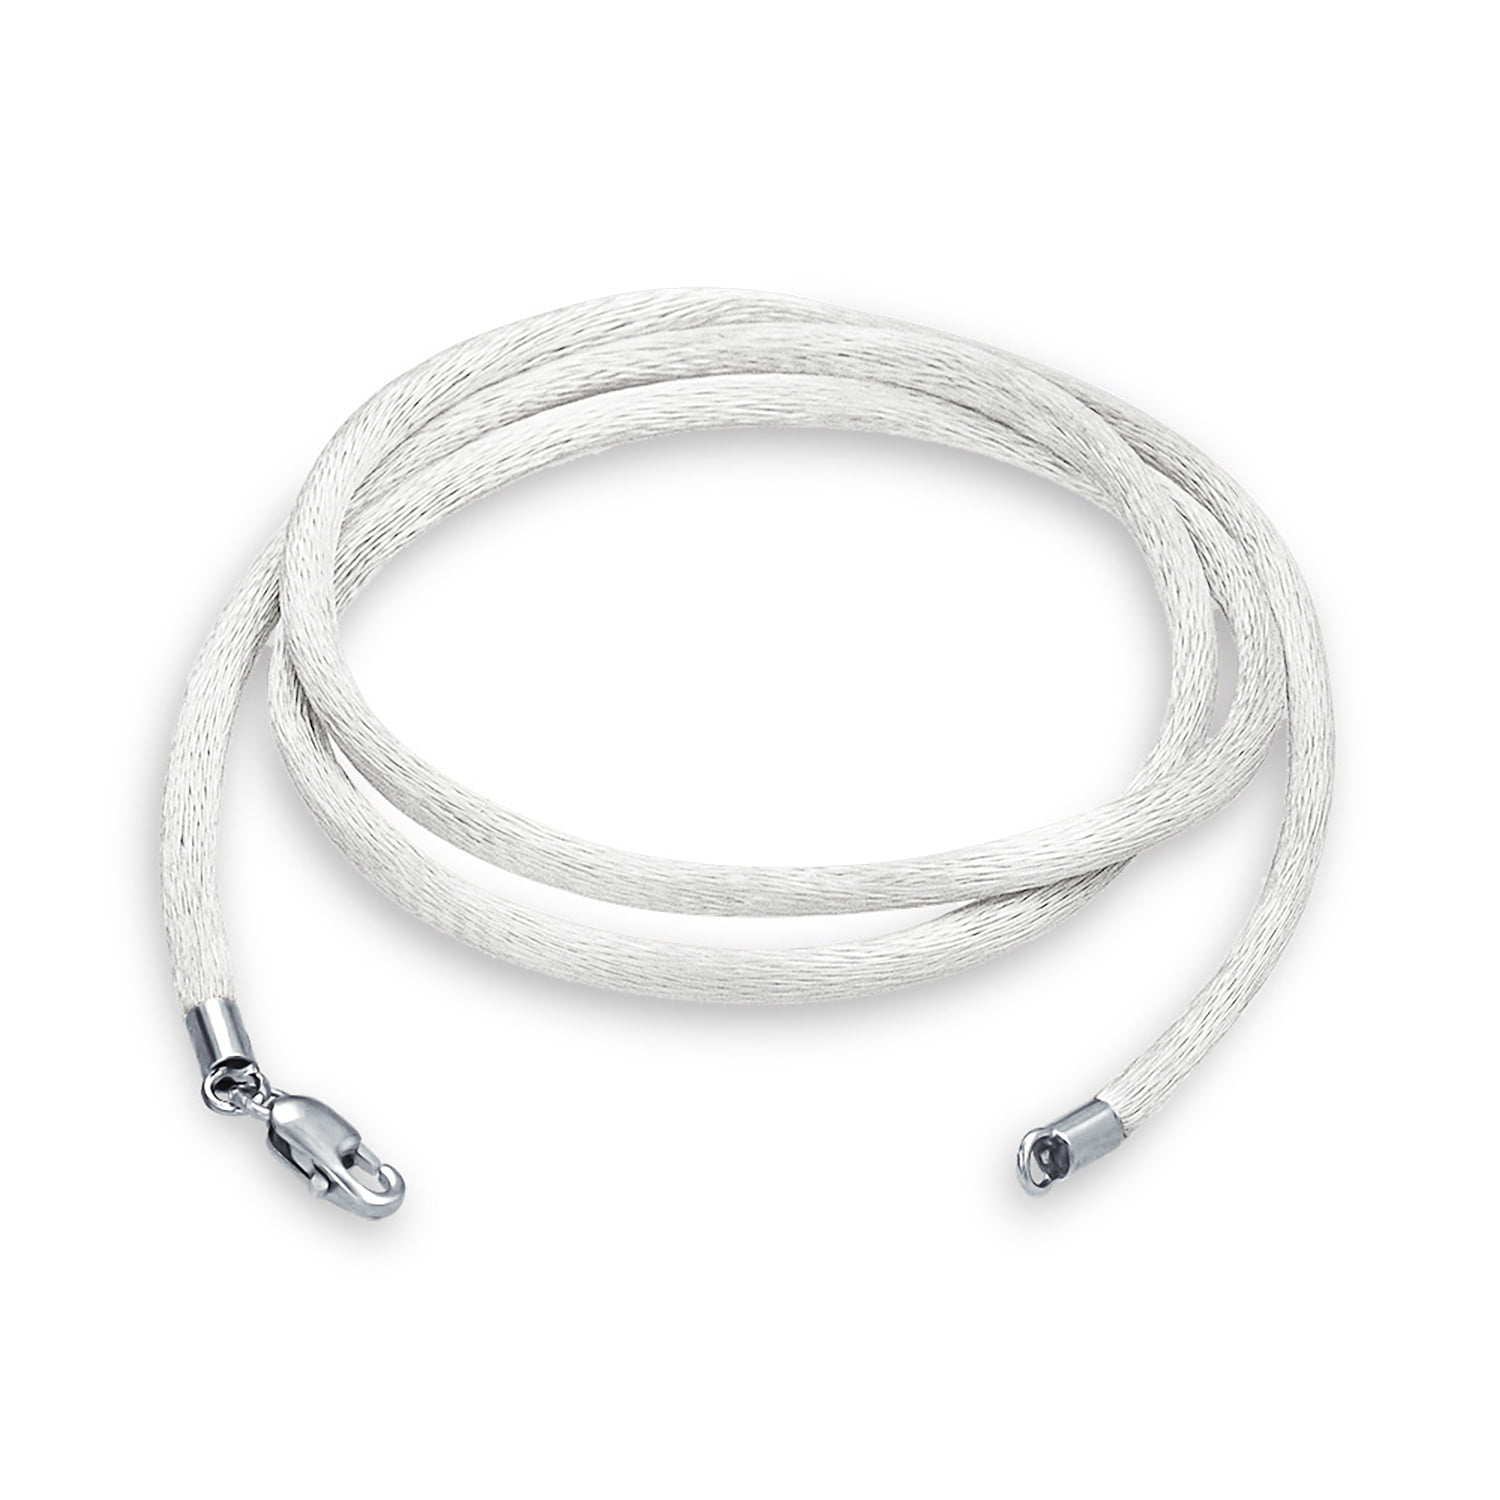 750m Pool Nylon Beading Thread Pearl String Cord 16 Color 0.2-0.3mm Jewelry  DIY Making Cord Thread Silk Costume Jewelry Thread - AliExpress